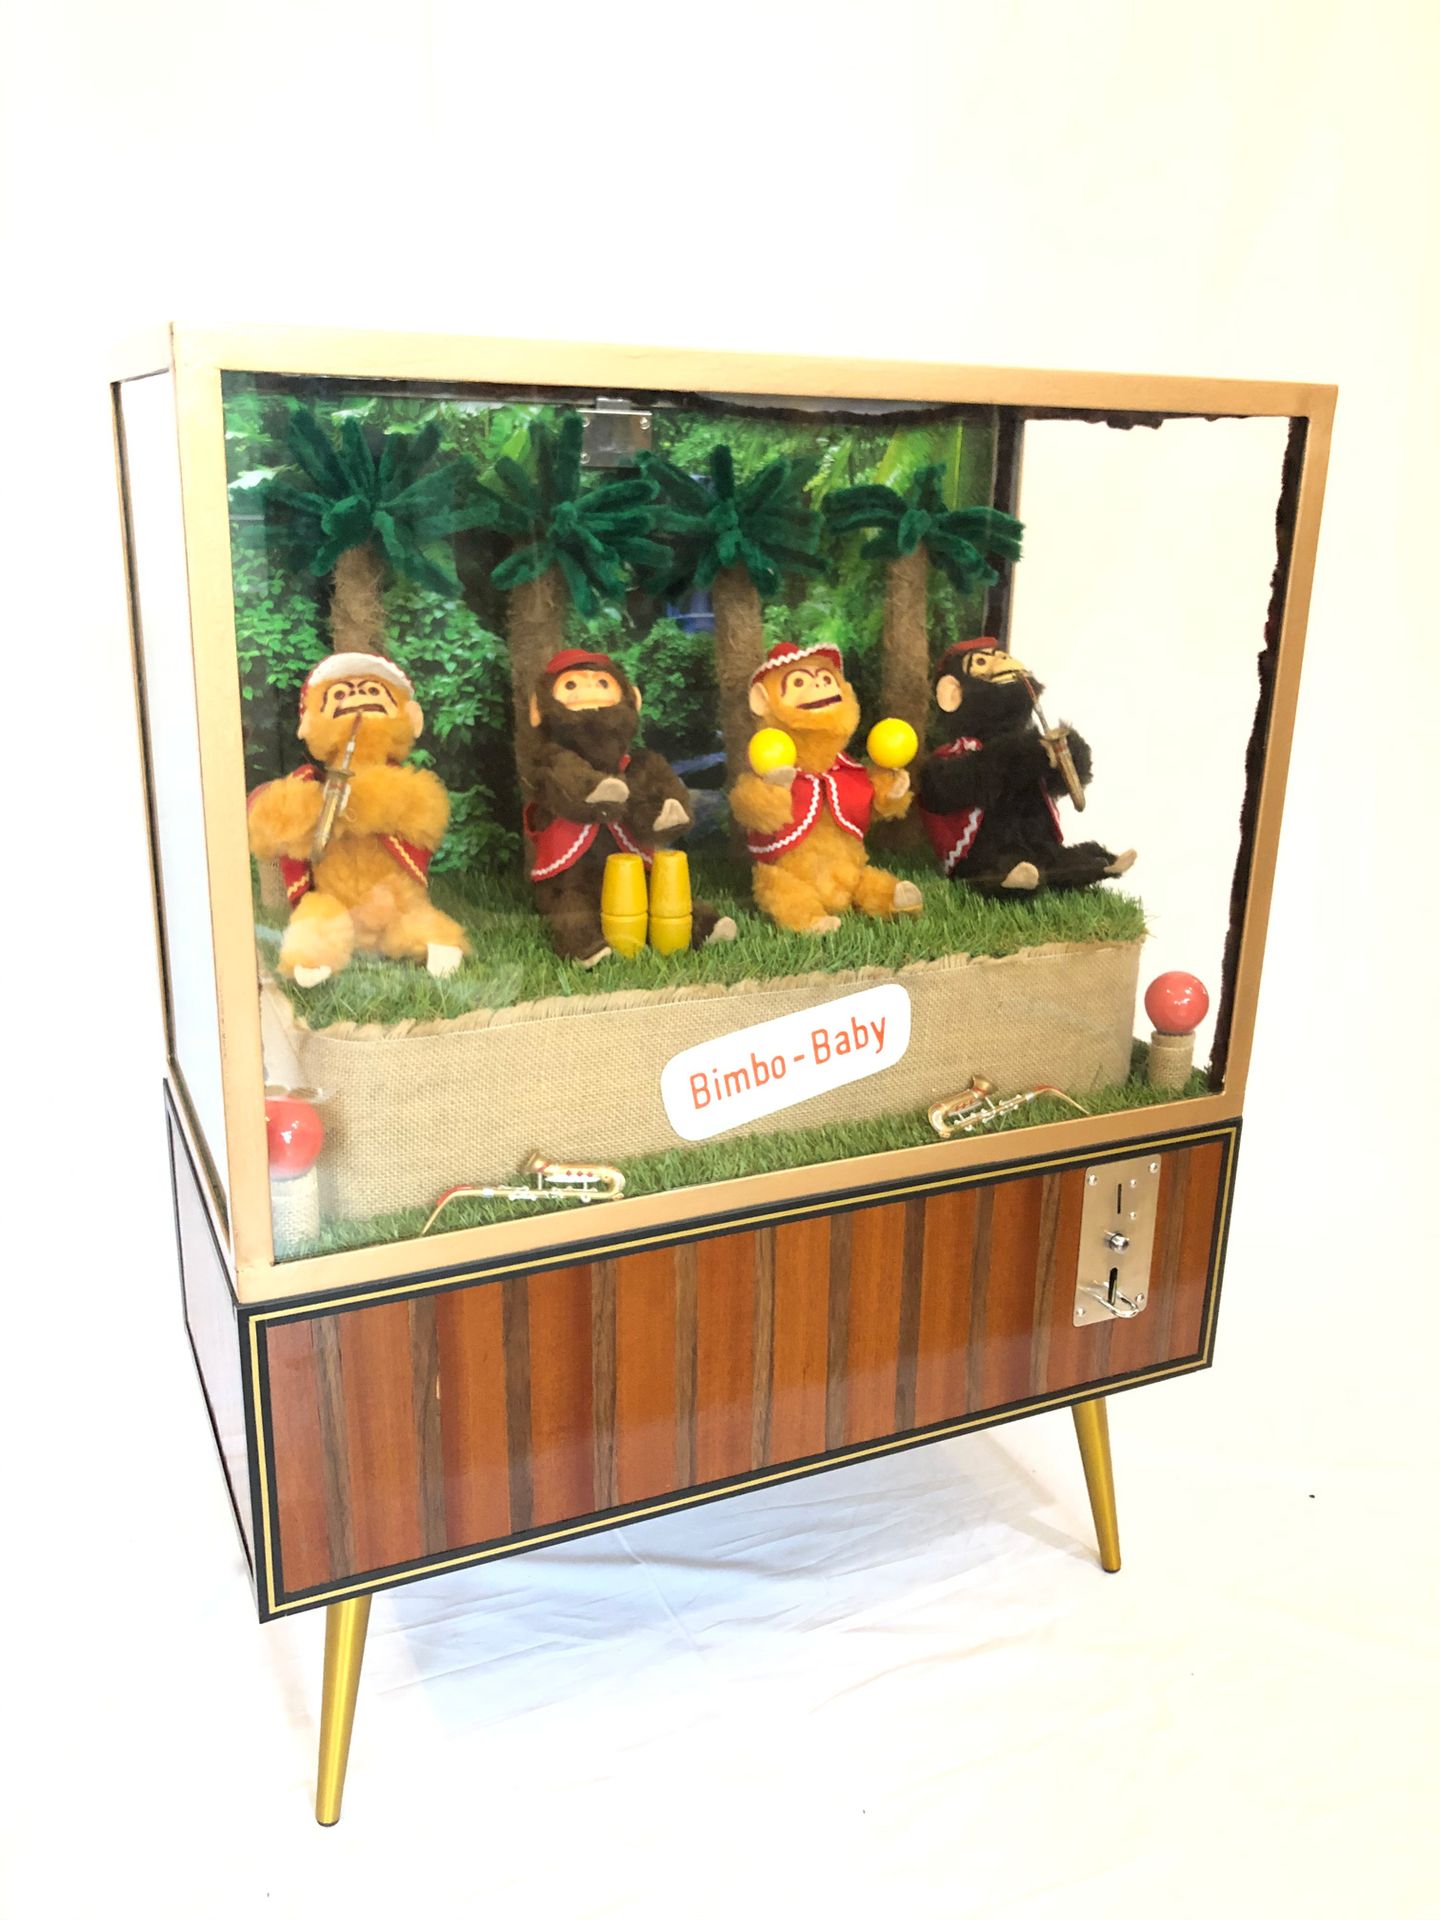 Bimbo-Baby Box with original monkeys from 60's Bimbo婴儿箱，带有1960年代的原始猴子，柜子后来被重新制作。&hellip;